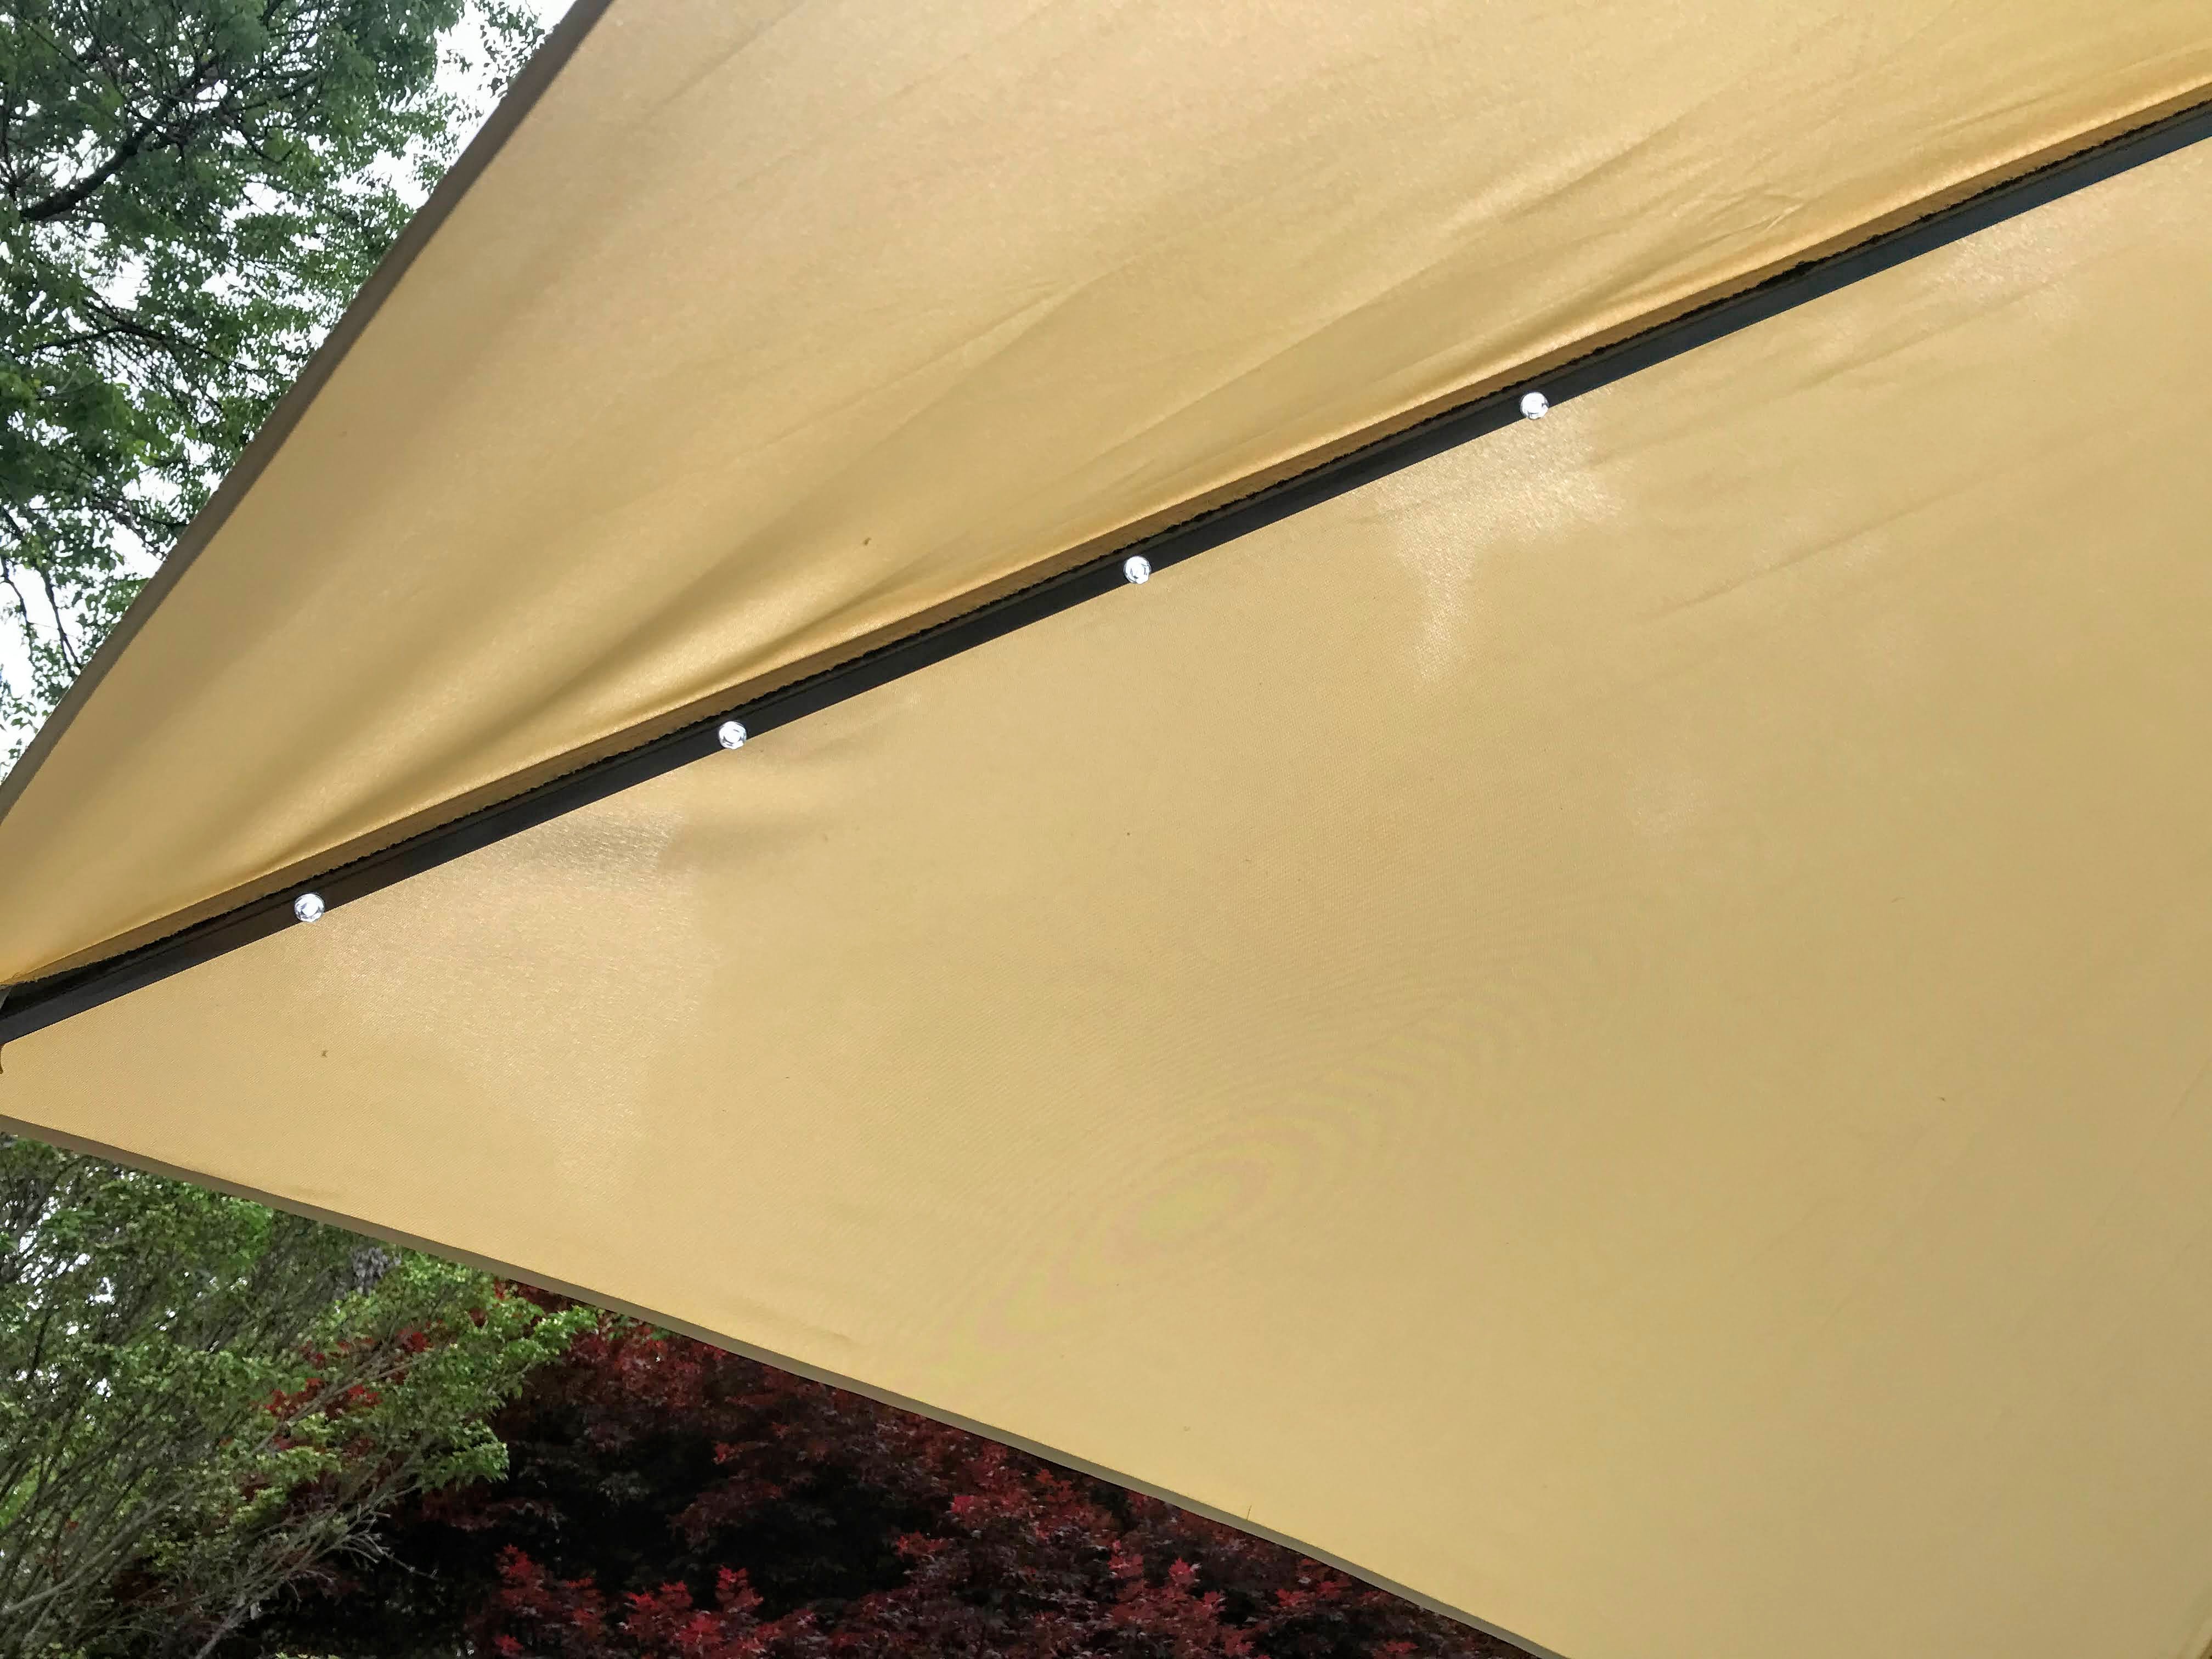 patio umbrella with solar lights